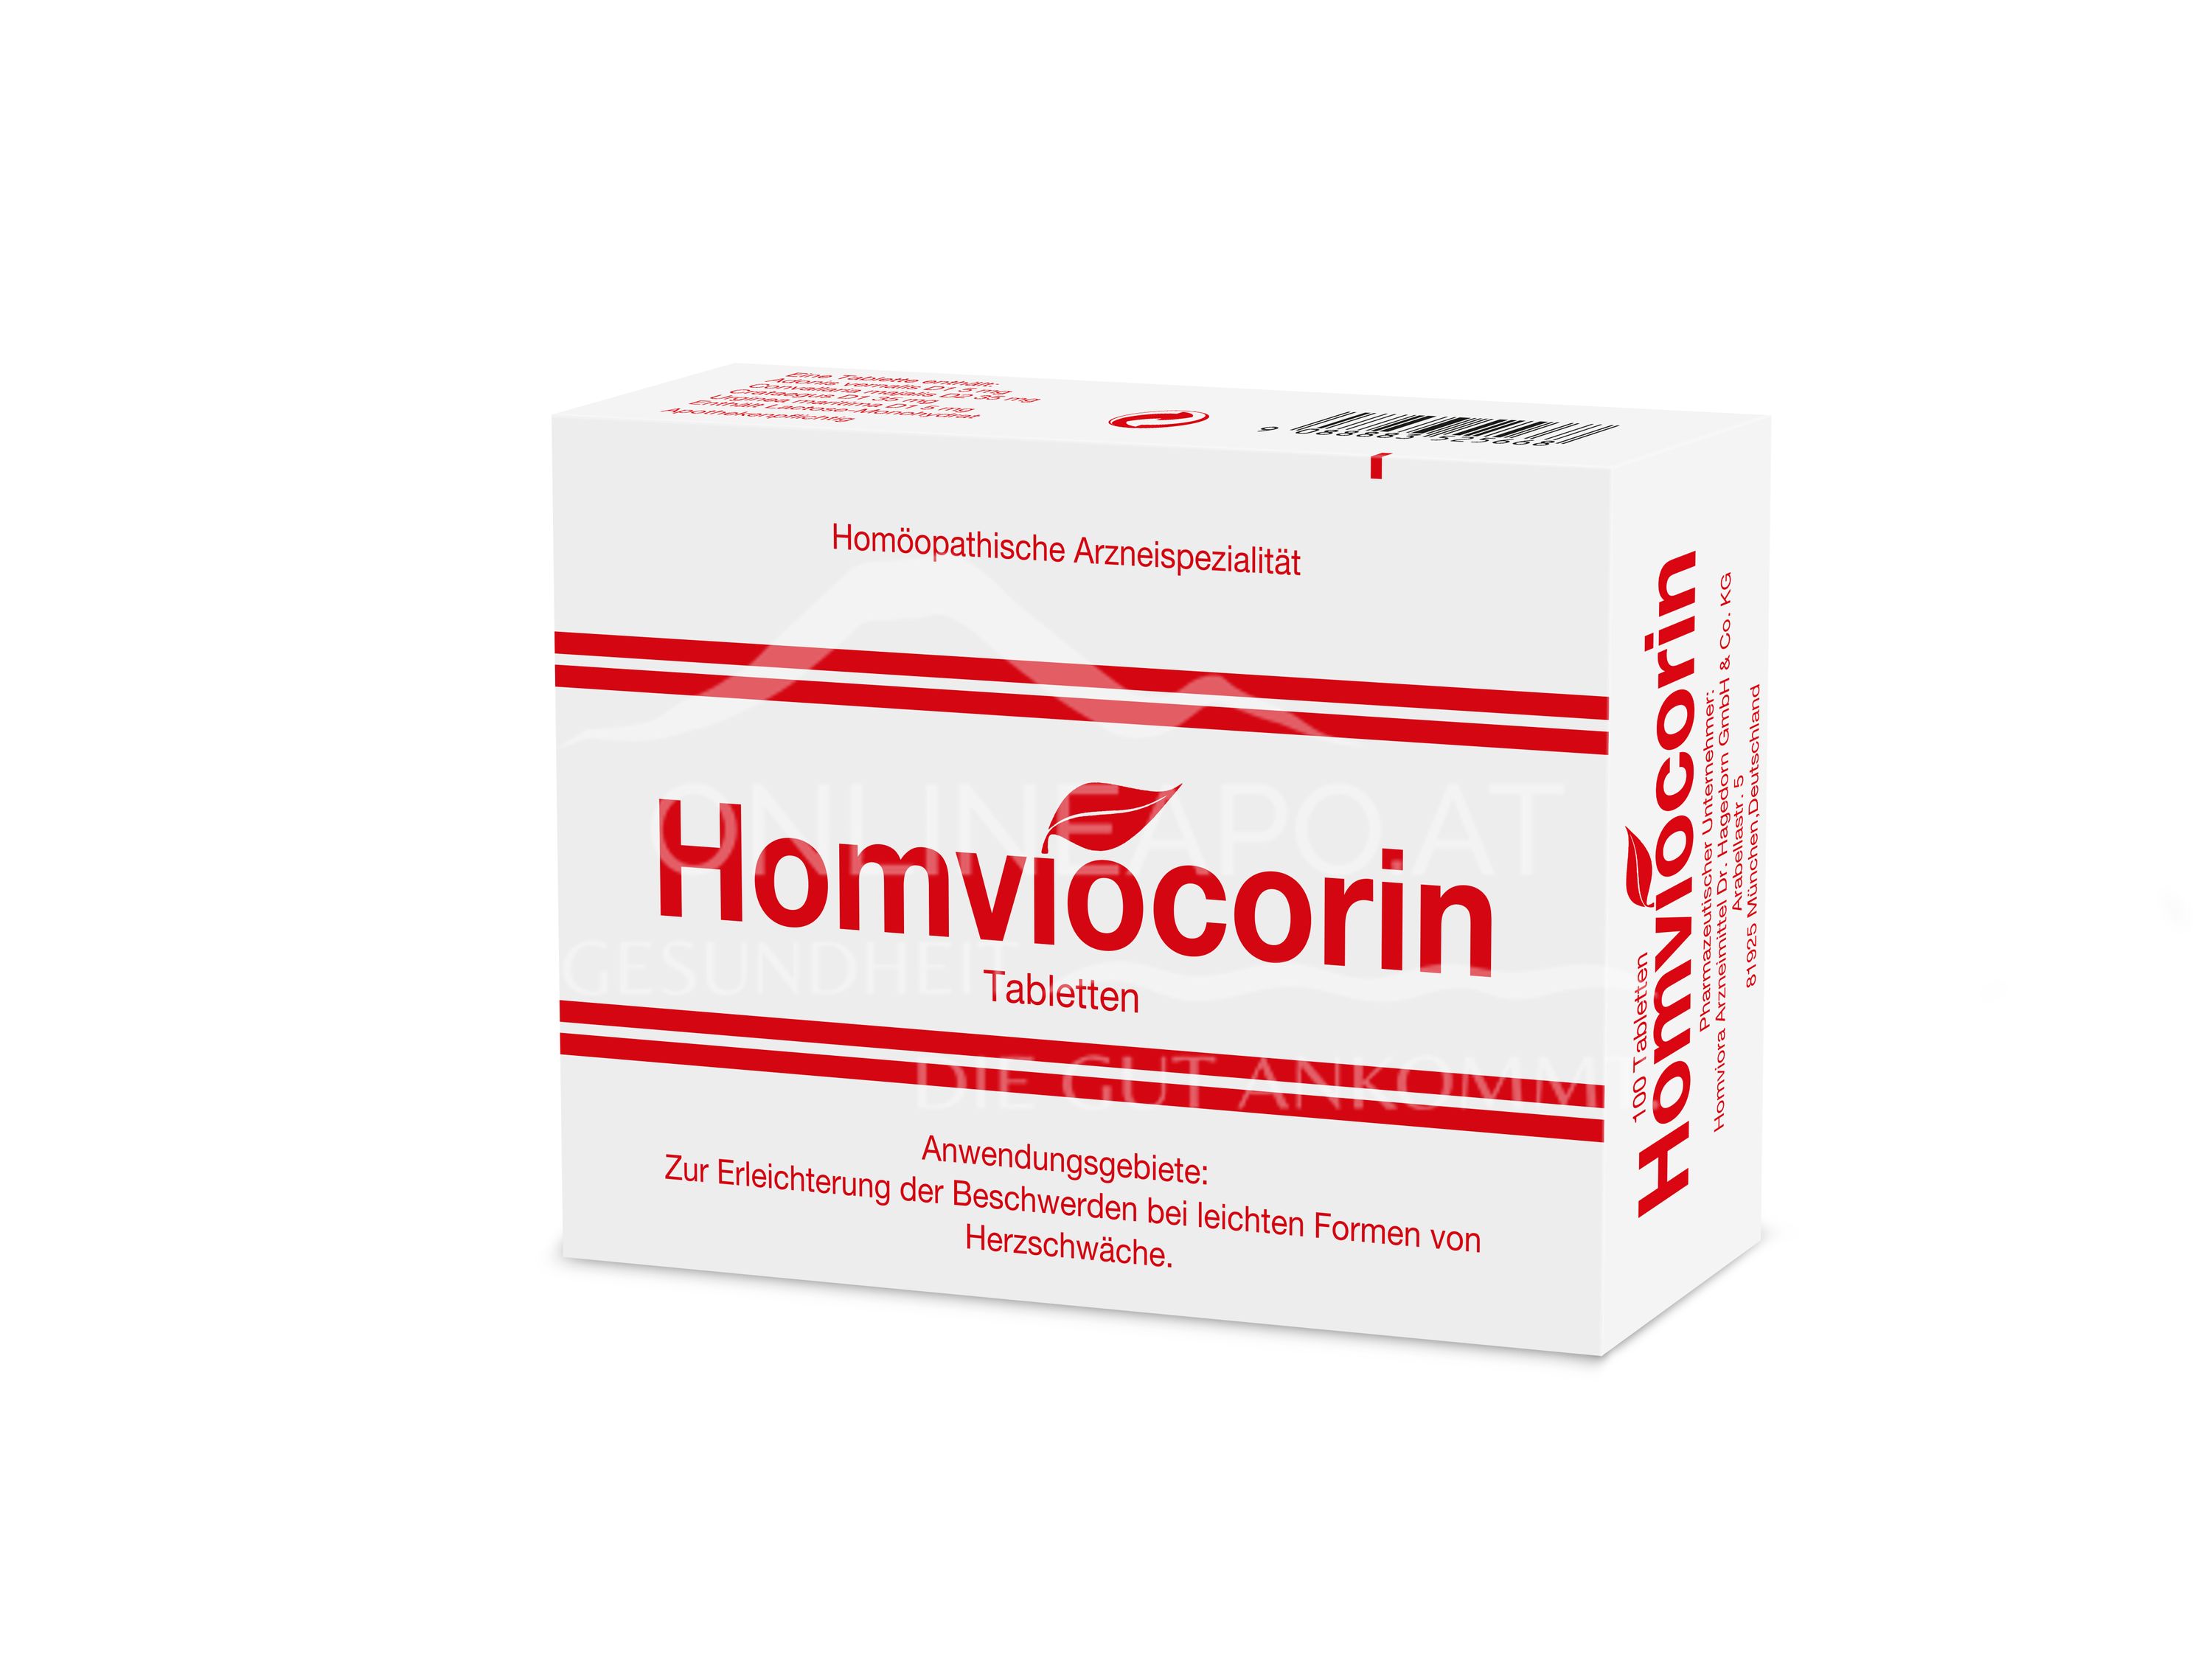 Homviocorin Tabletten